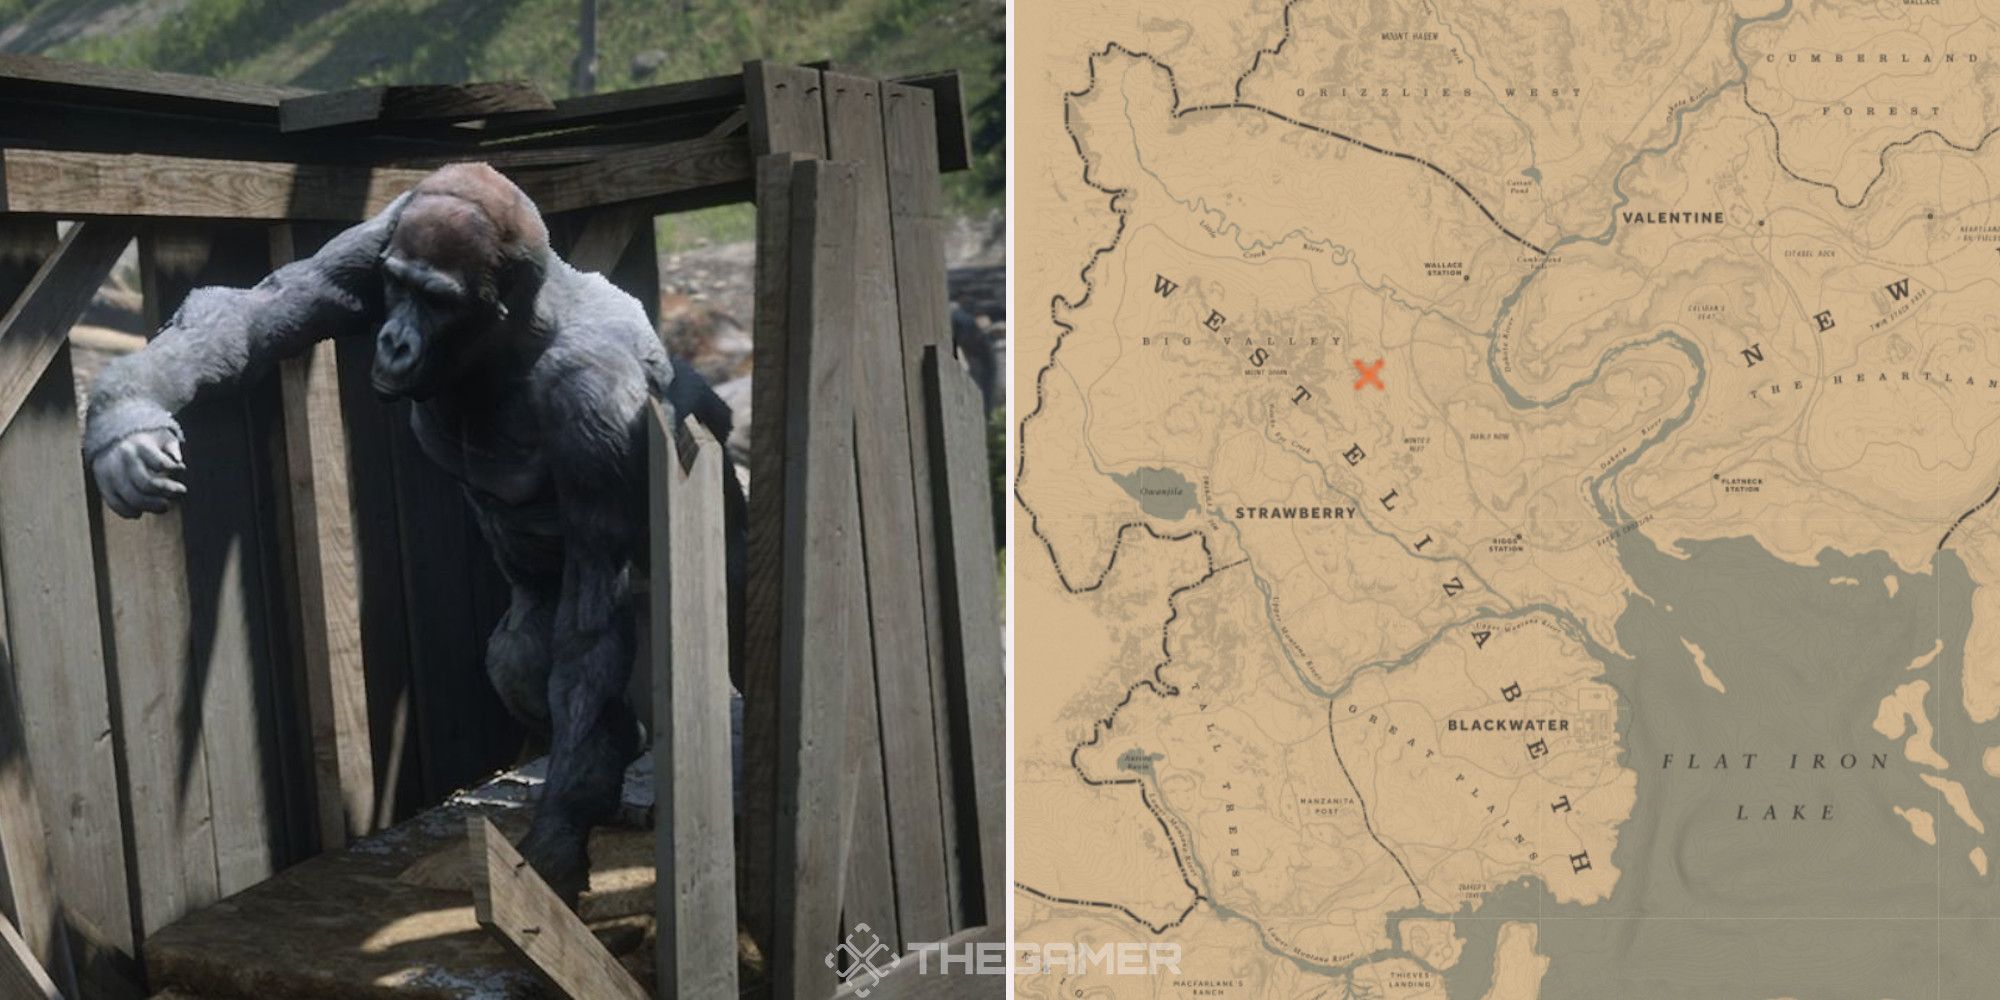 Stuffed Gorilla in crate ravine West Elizabeth alongside its location on the map.